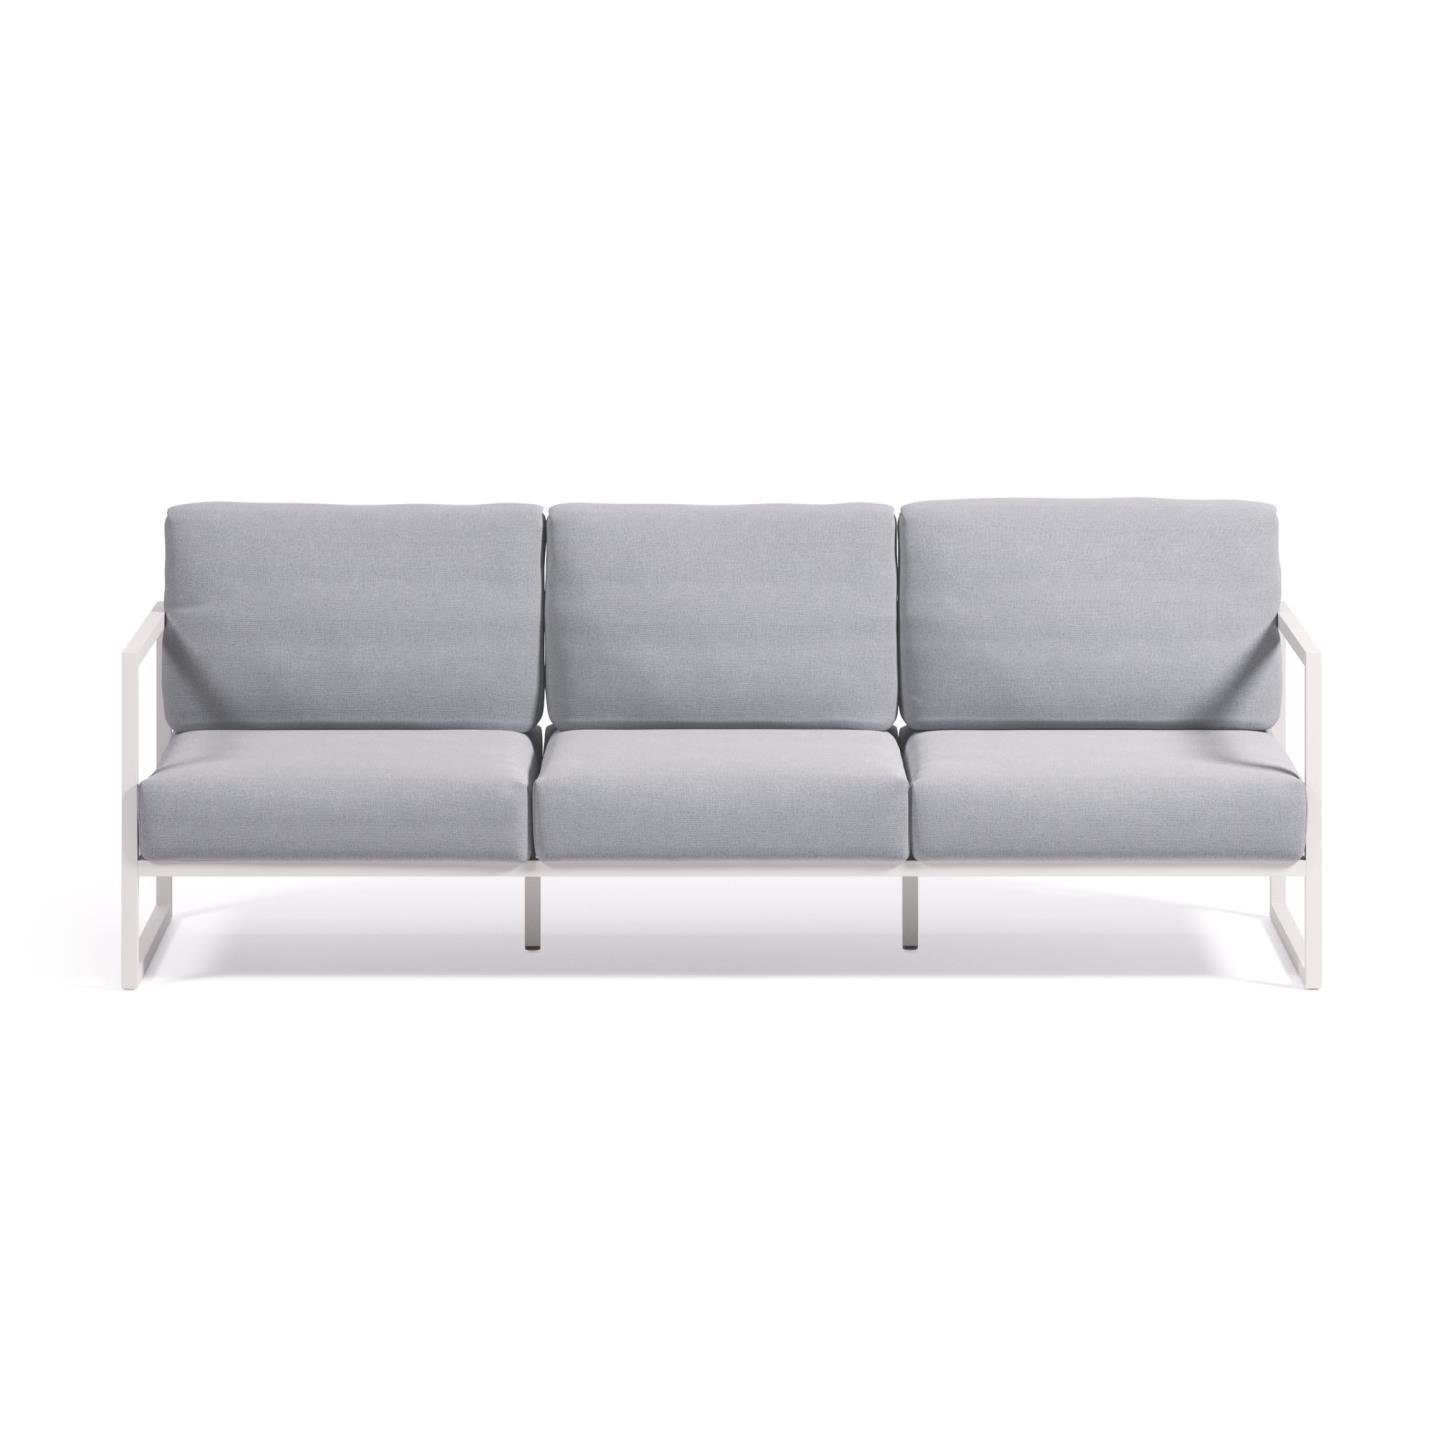 Natur24 Sofa Outdoor 3-Sitzer-Sofa blau 225 x 85 x 85 cm Sitzgarnitur Couch